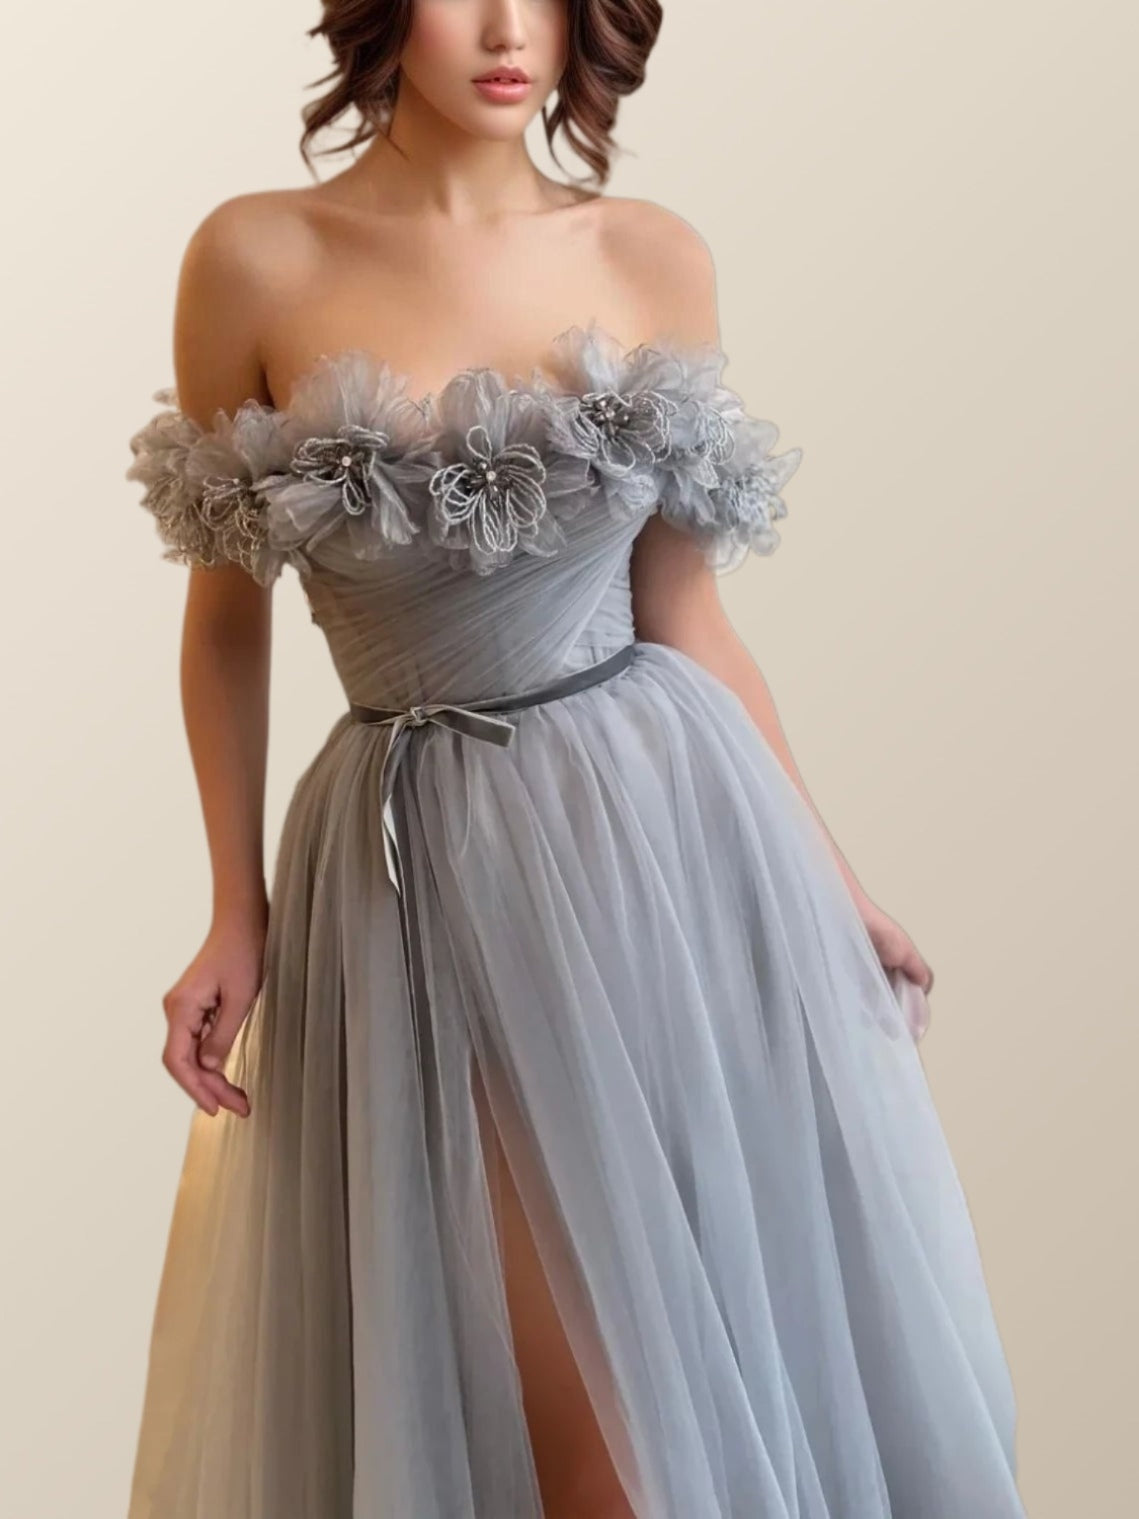 LARA Formal Couture Dress